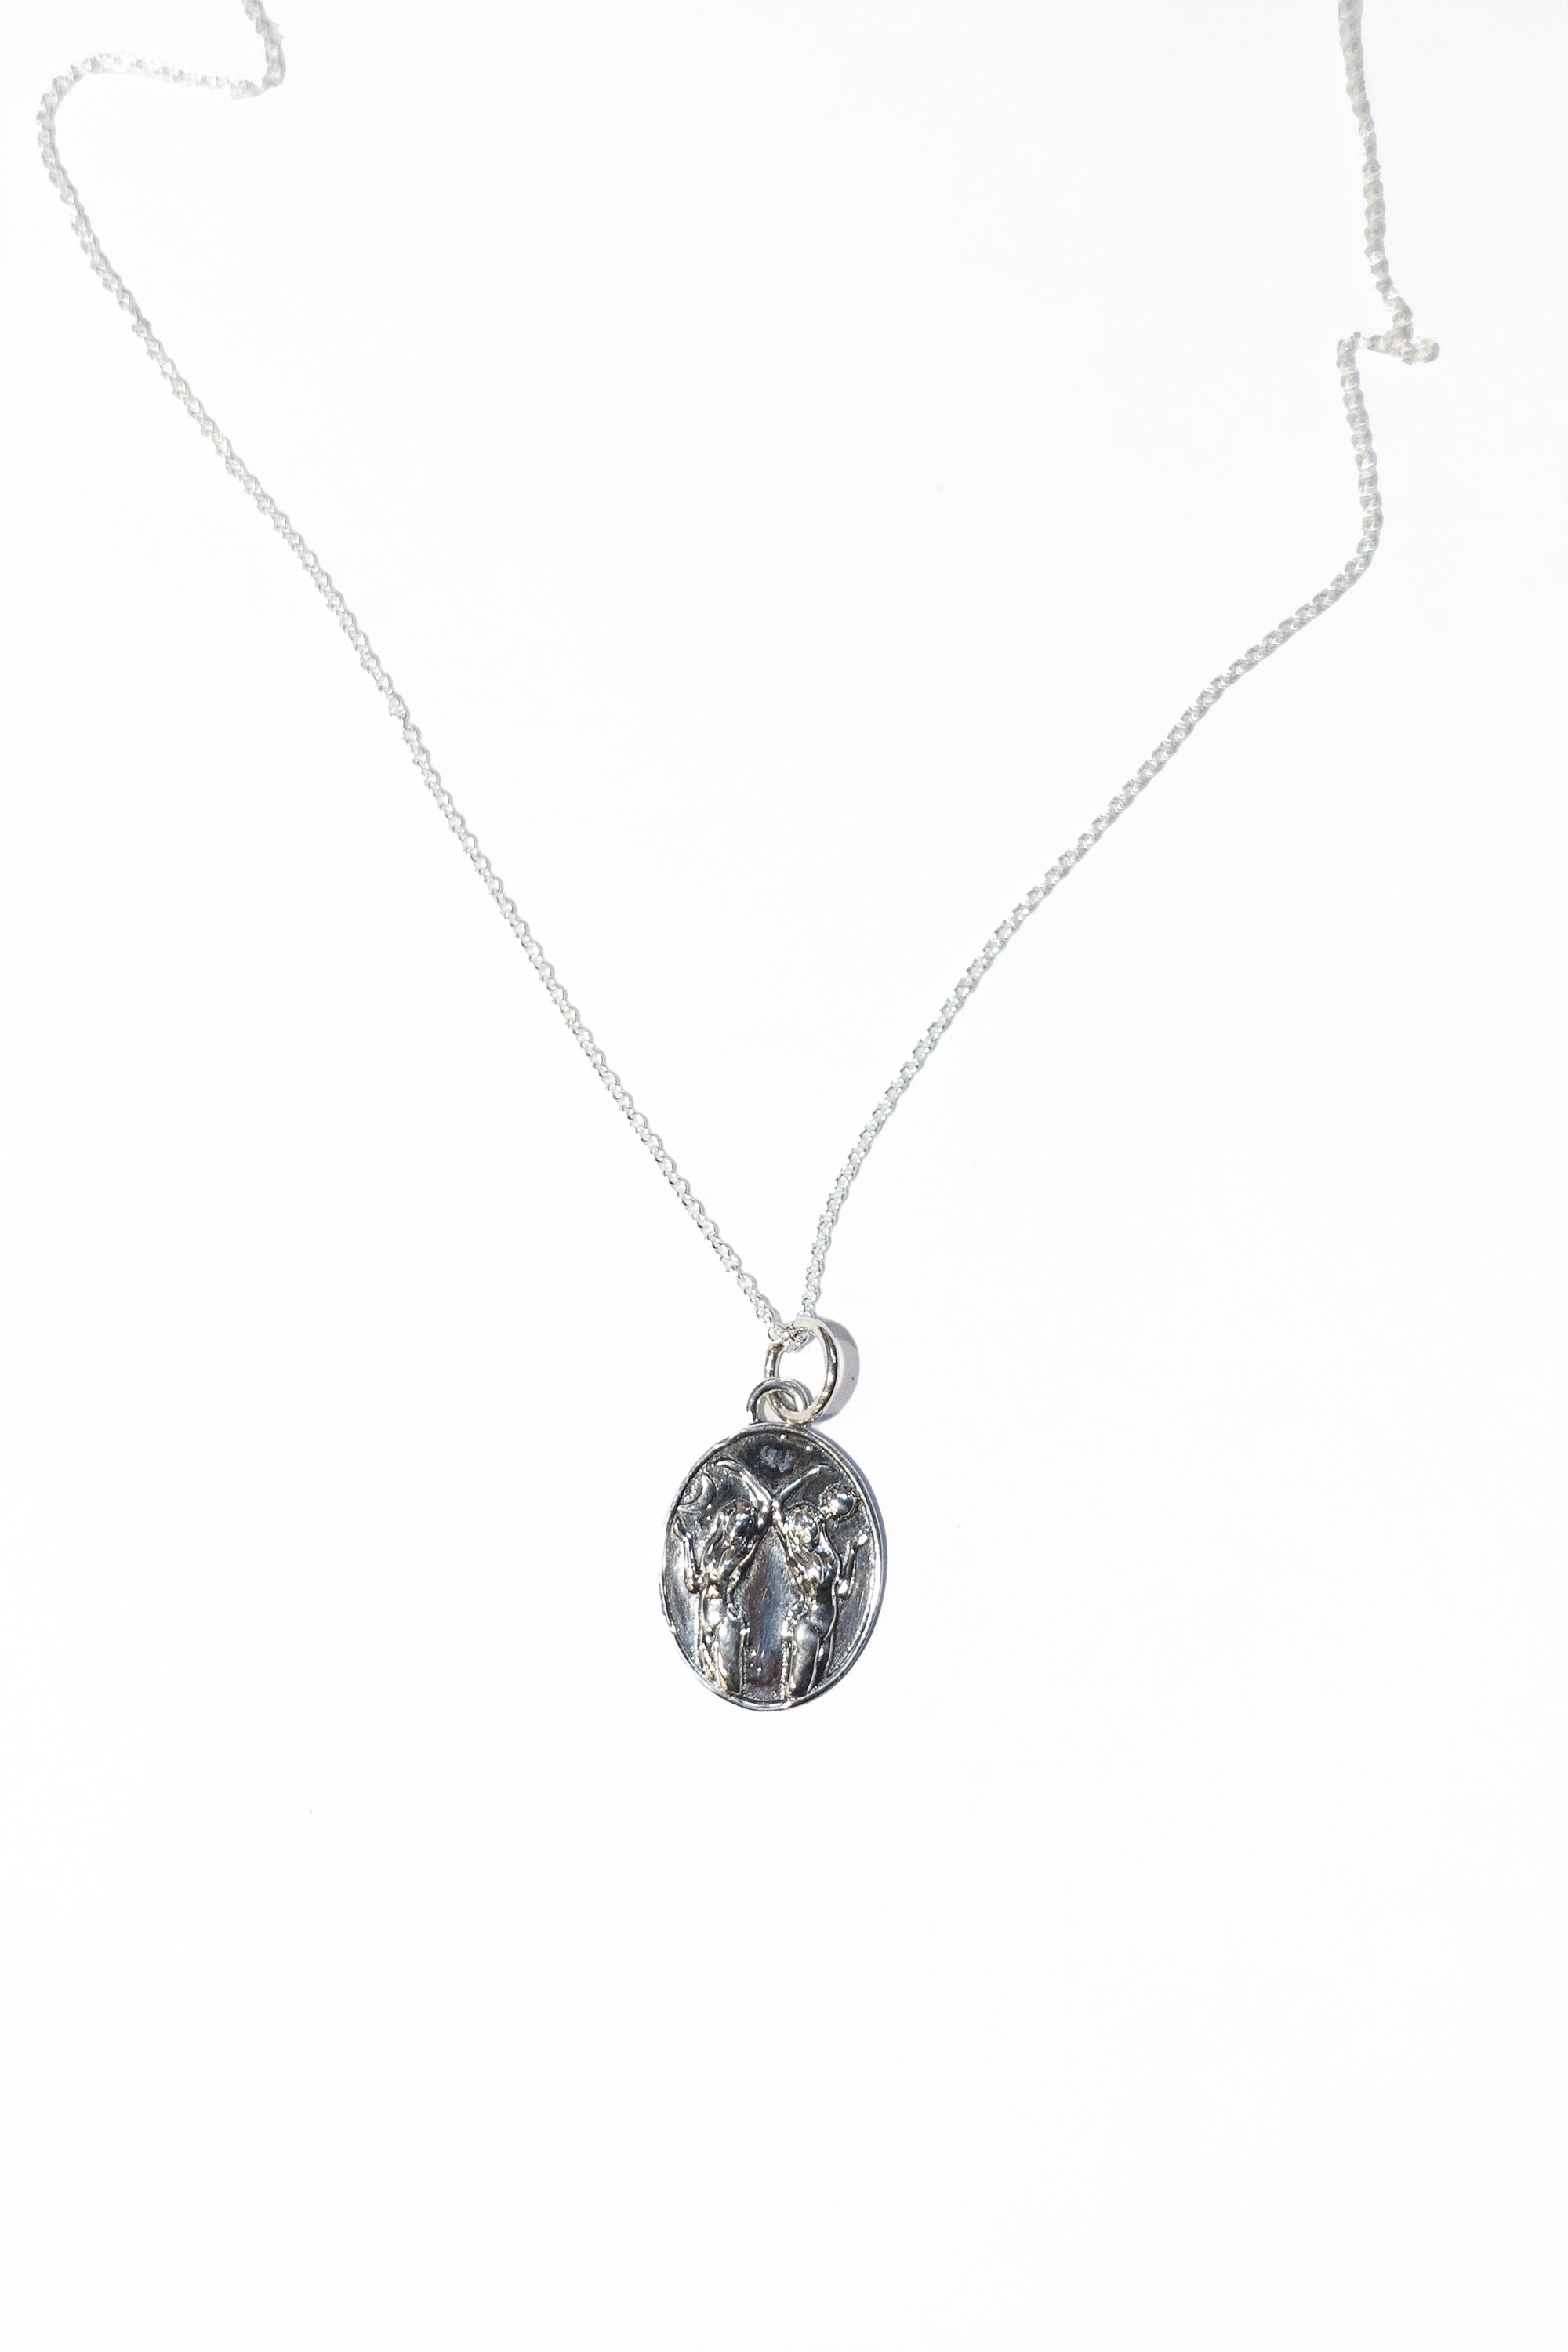 Zodiac Pendant Necklace in Sterling Silver